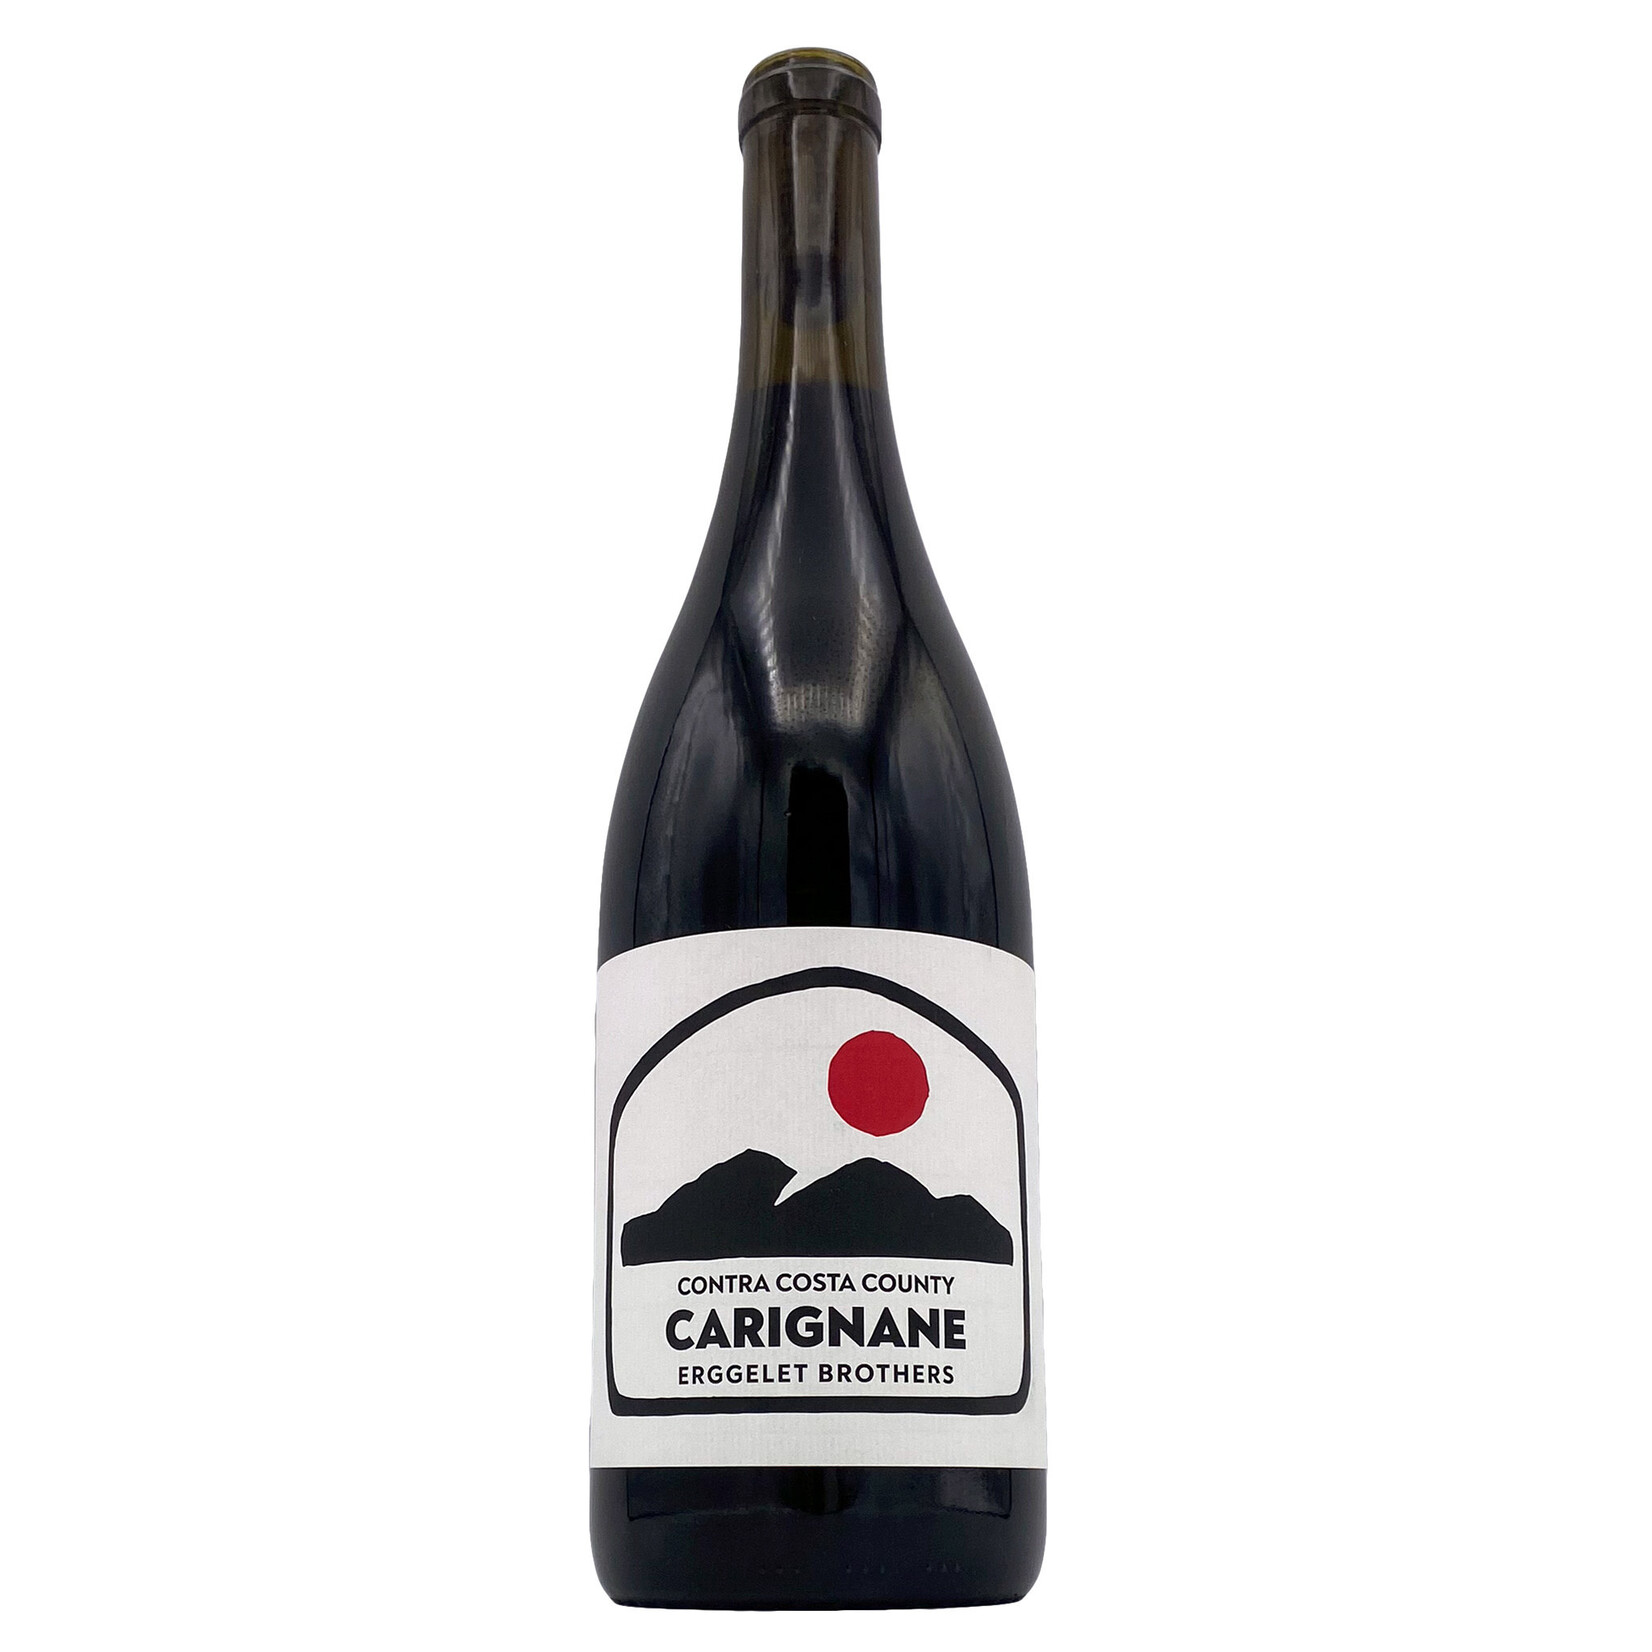 Wine Erggelet Brothers Carignane Del Barba Vineyard Old Vines Contra Costa County 2019